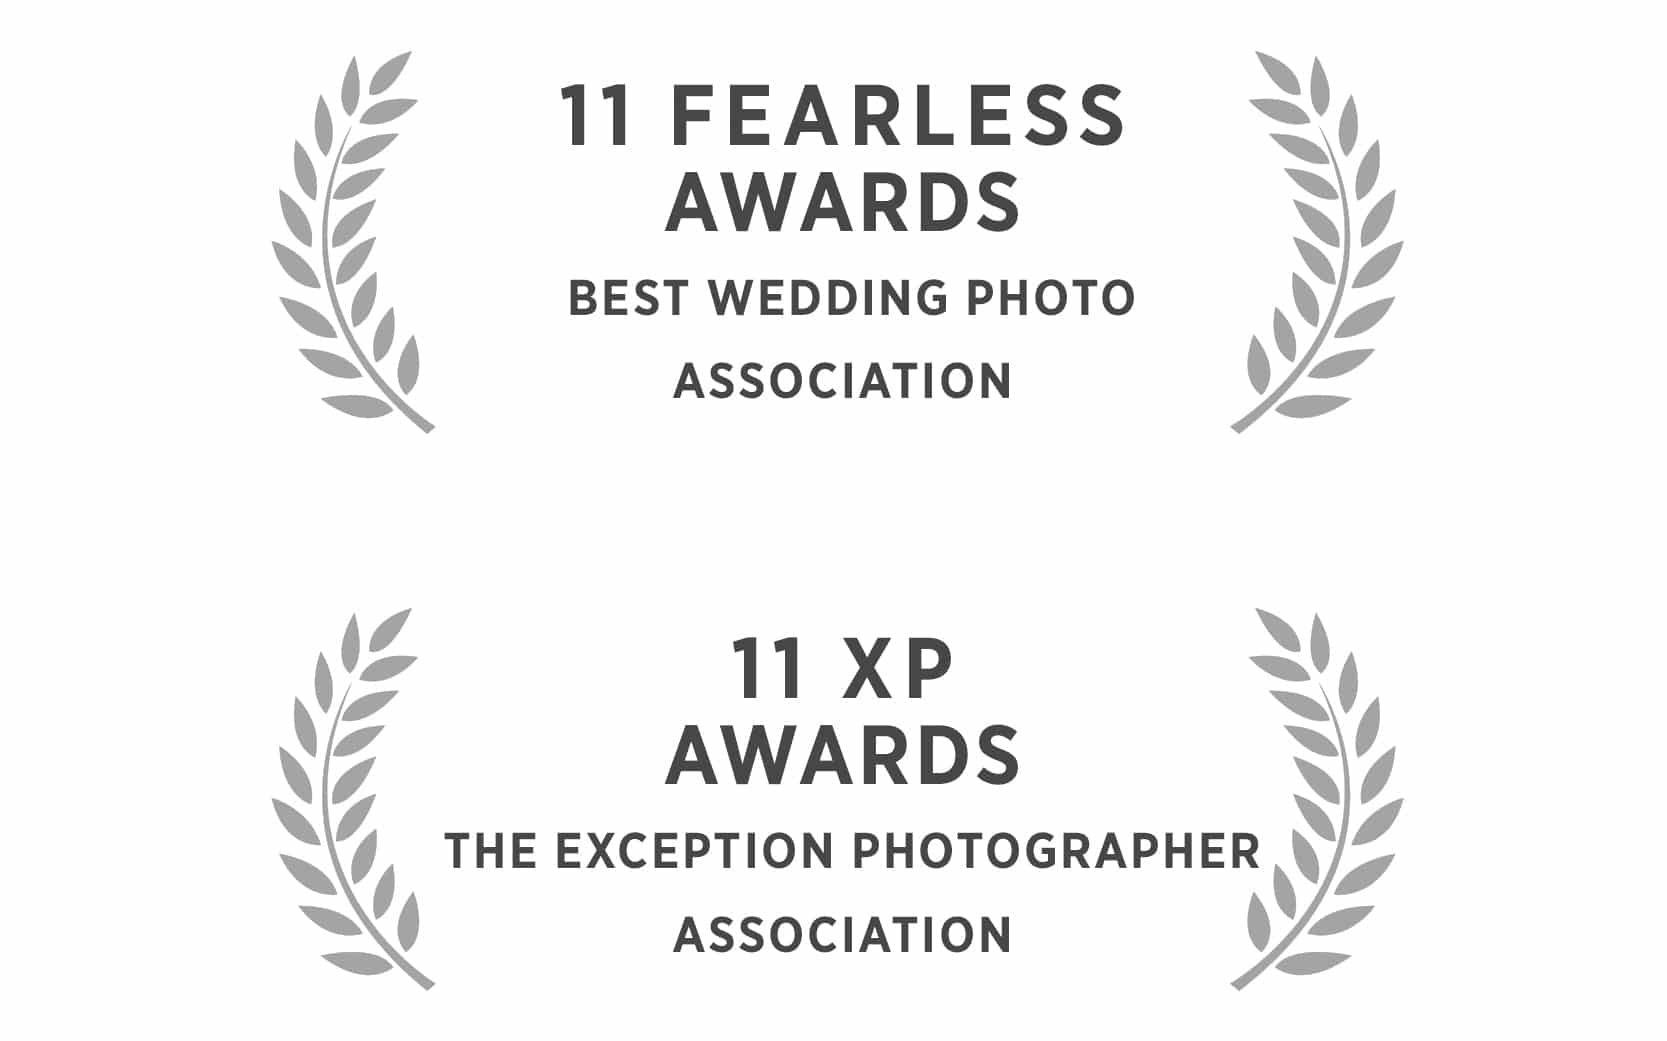 Awards winning photographer in France.